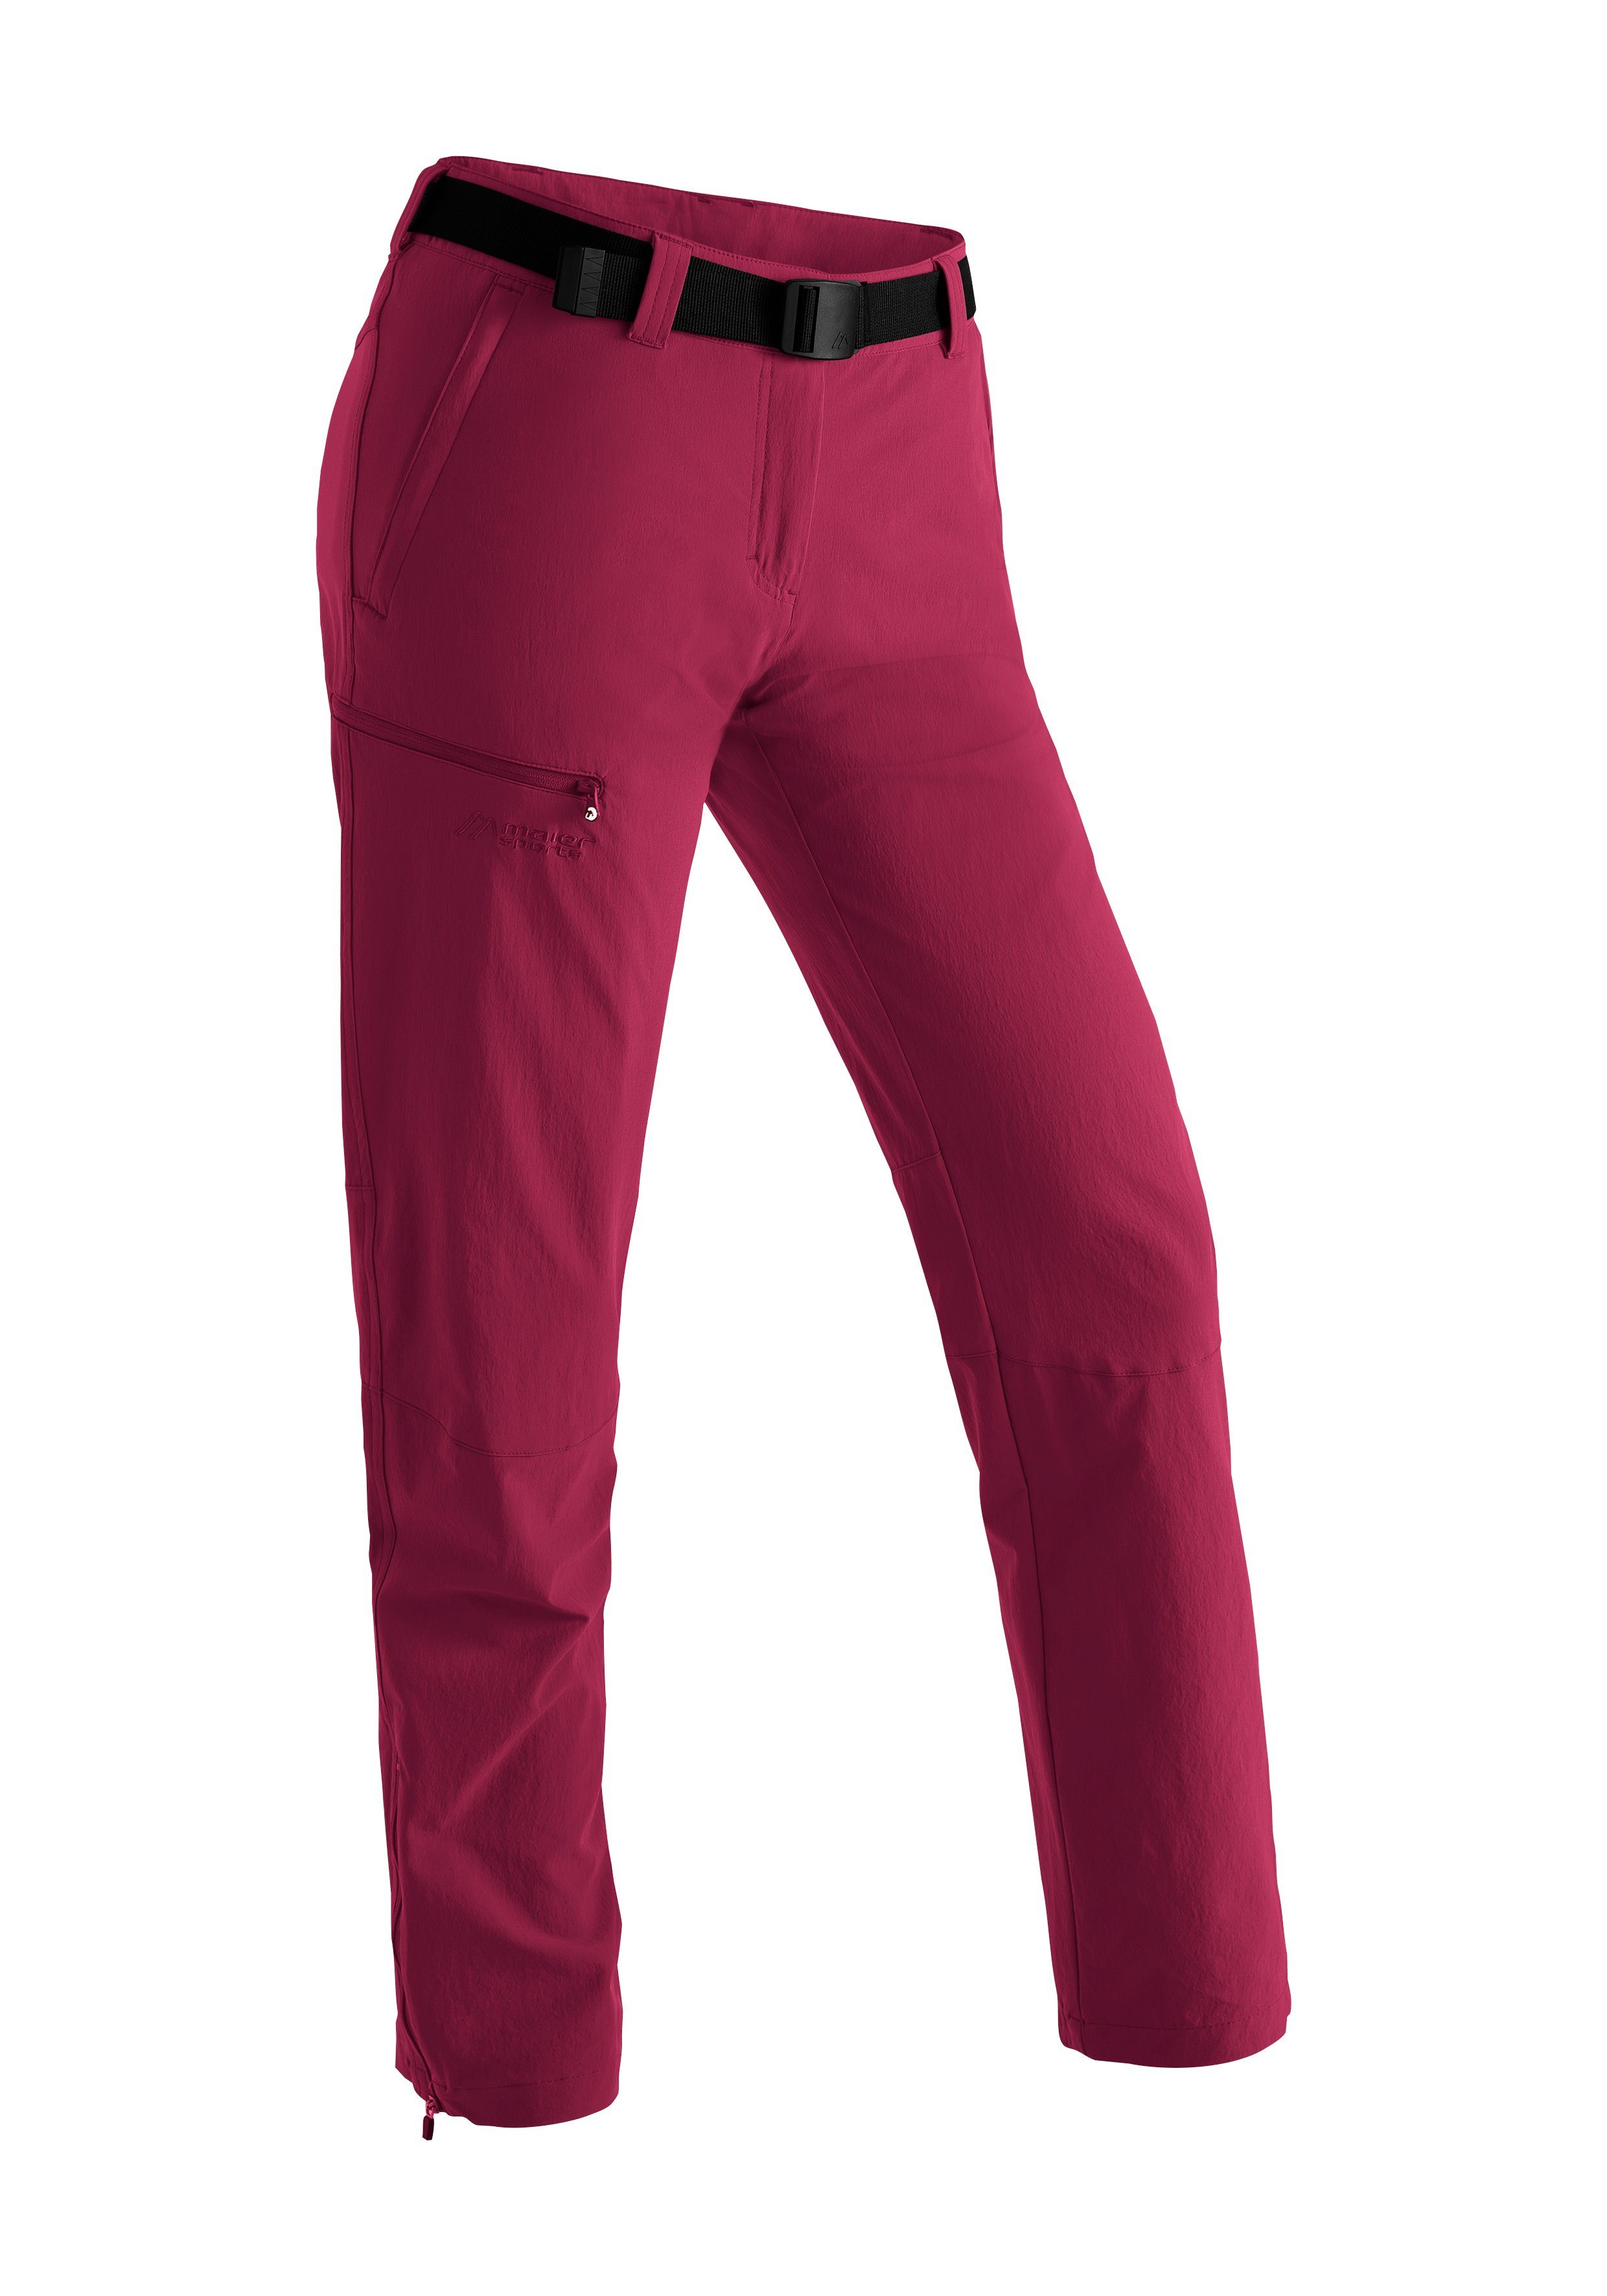 Maier Sports Funktionshose Inara slim Damen Wanderhose, Outdoor-Hose aus elastischem Material purpurrot